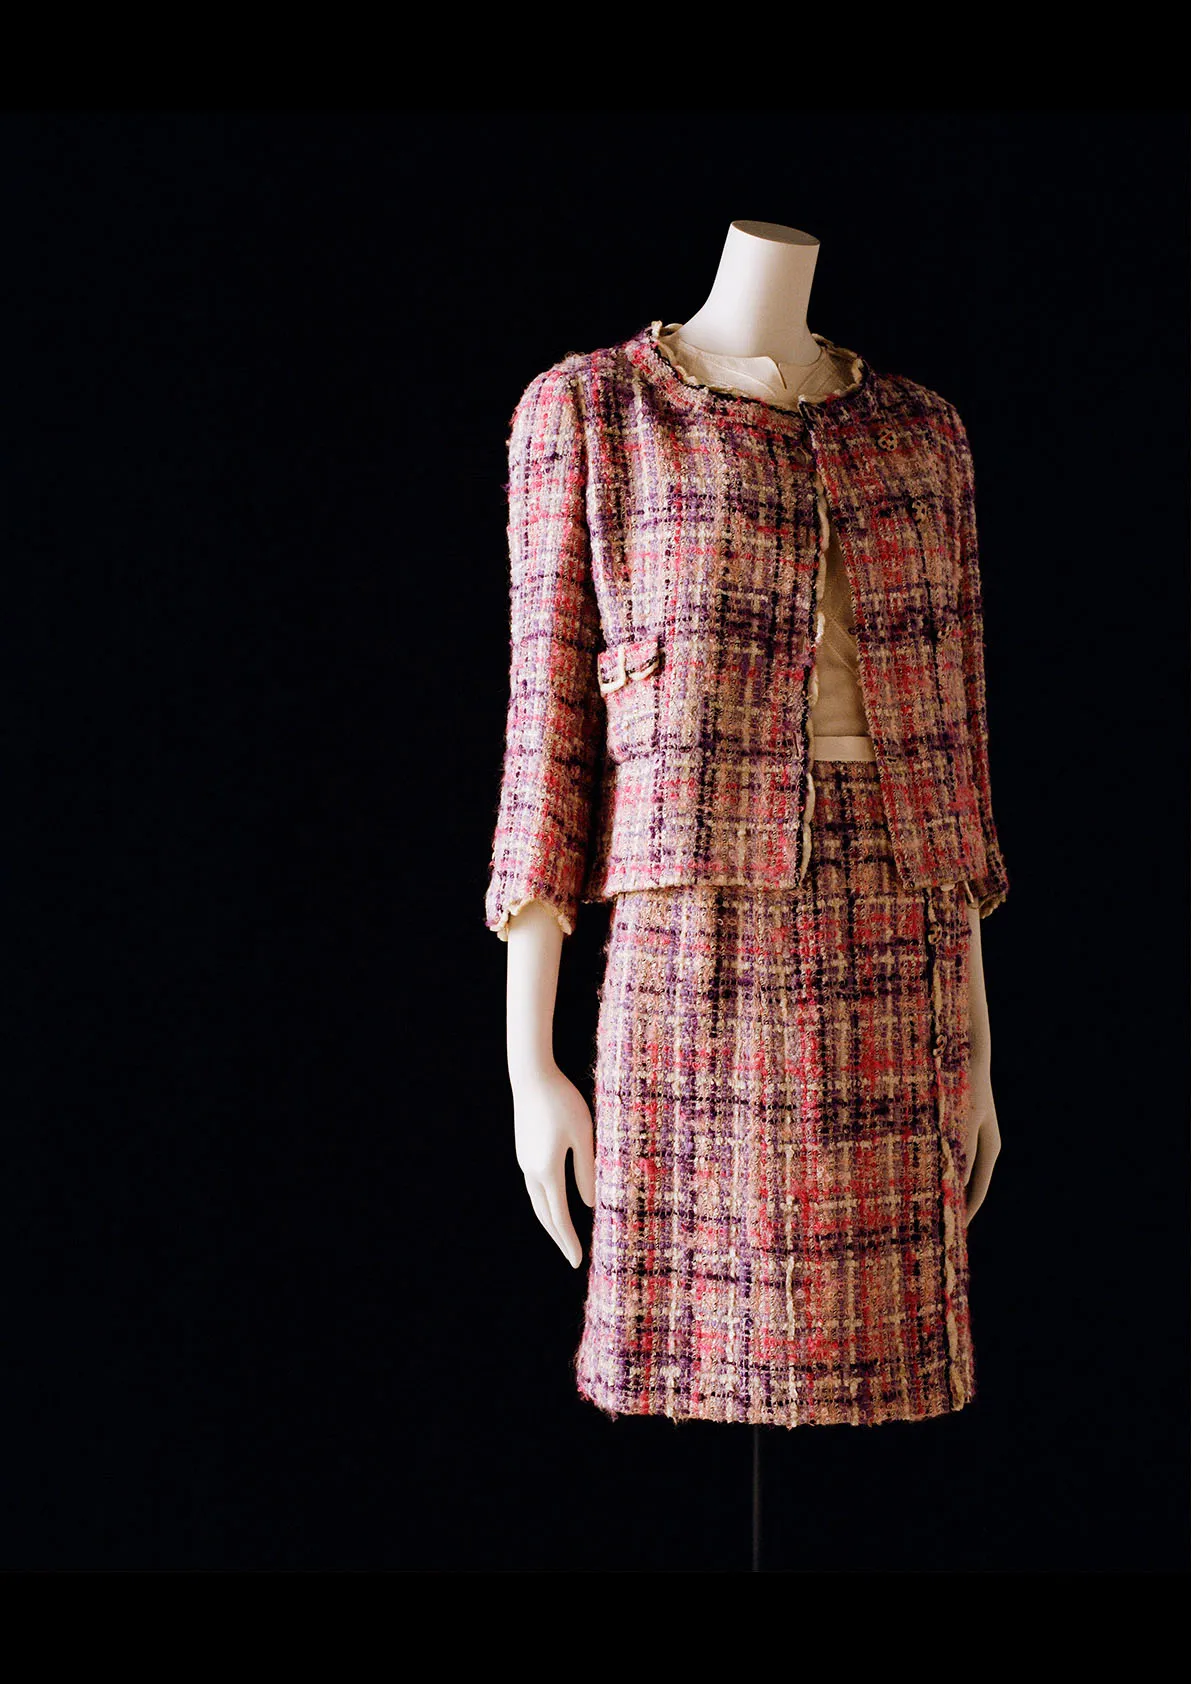 Gabrielle Chanel - Manifeste de Mode （Mitsubishi Ichigokan Museum